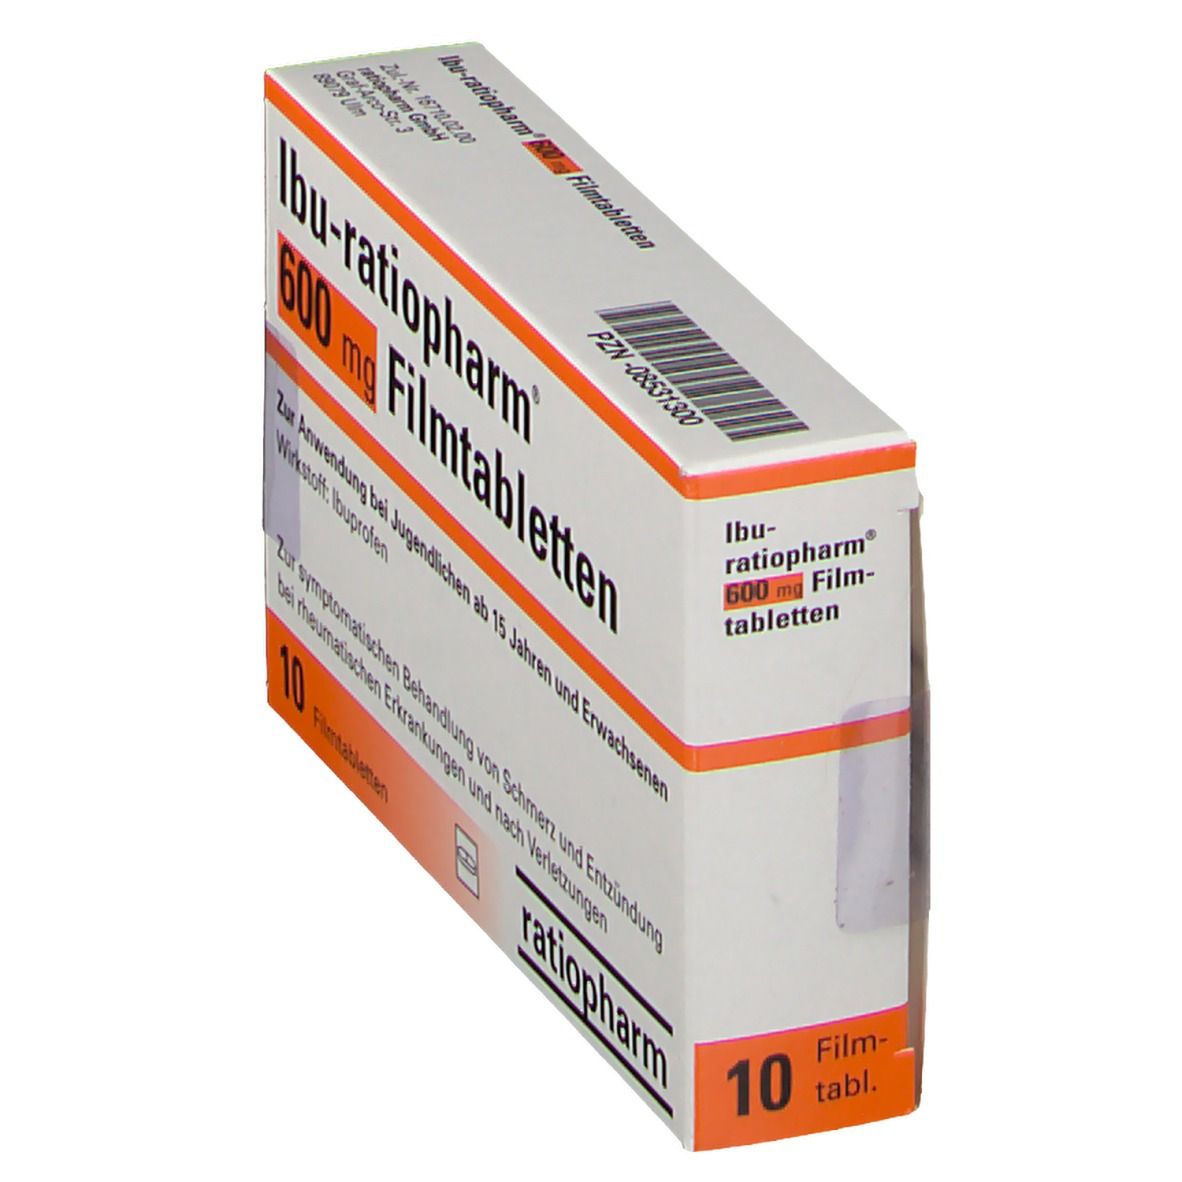 Ibu-ratiopharm® 600 mg